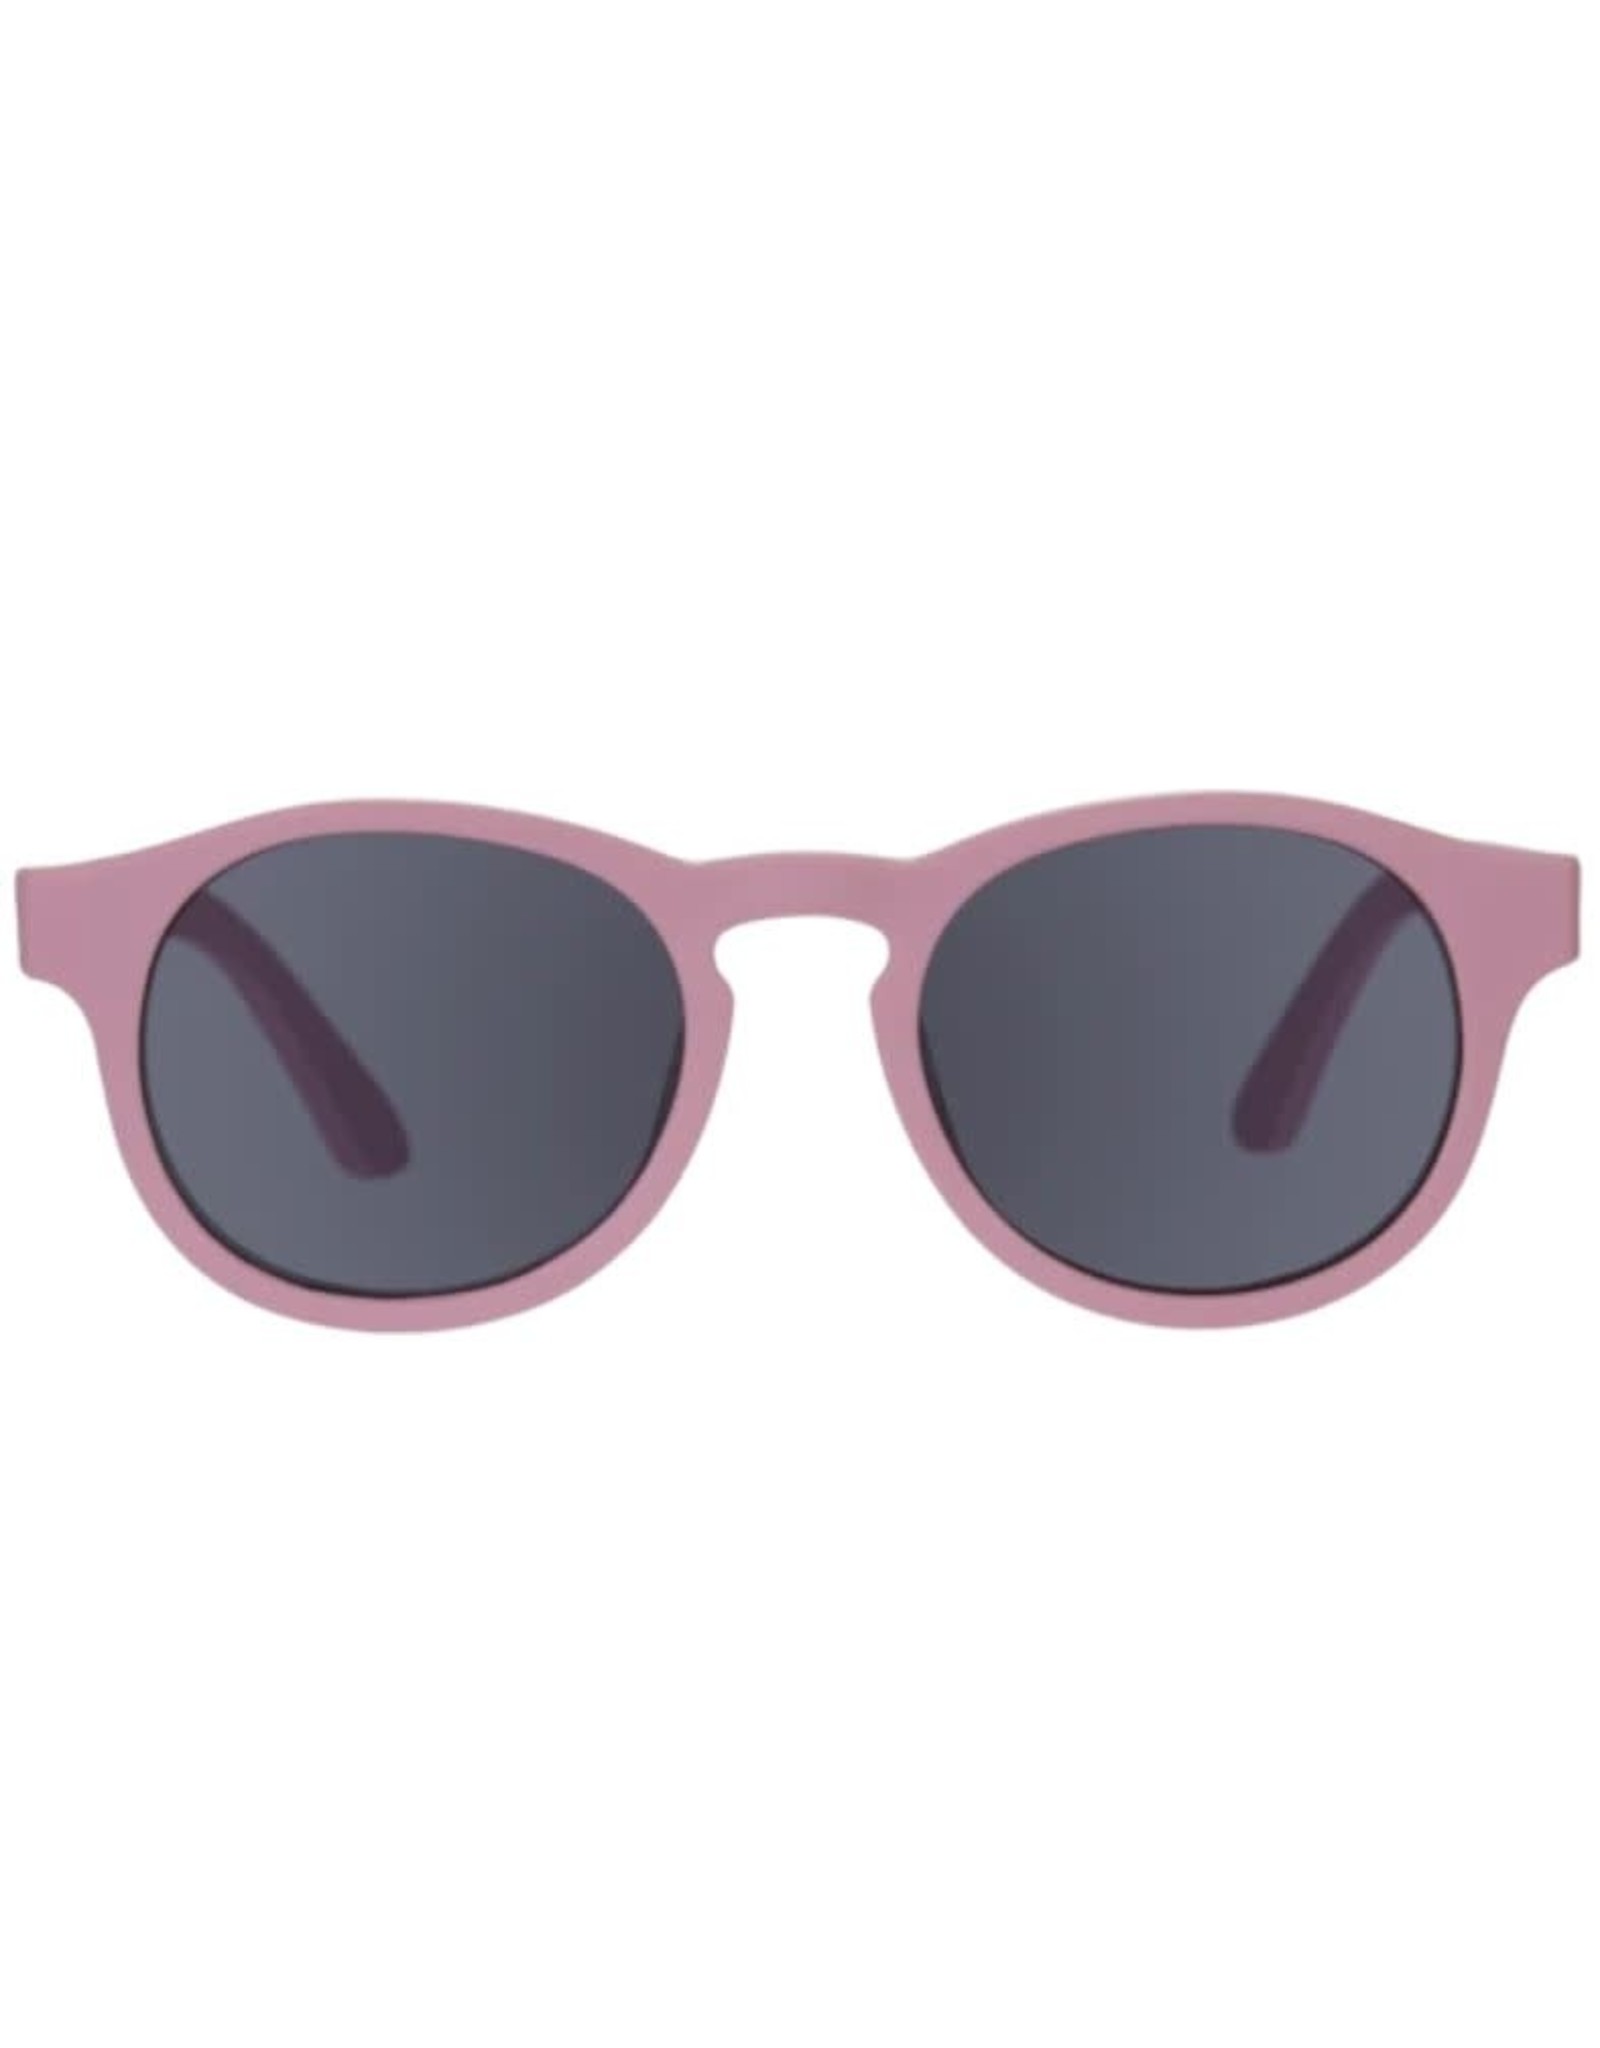 Babiators "Pretty in Pink" Keyhole Sunglasses